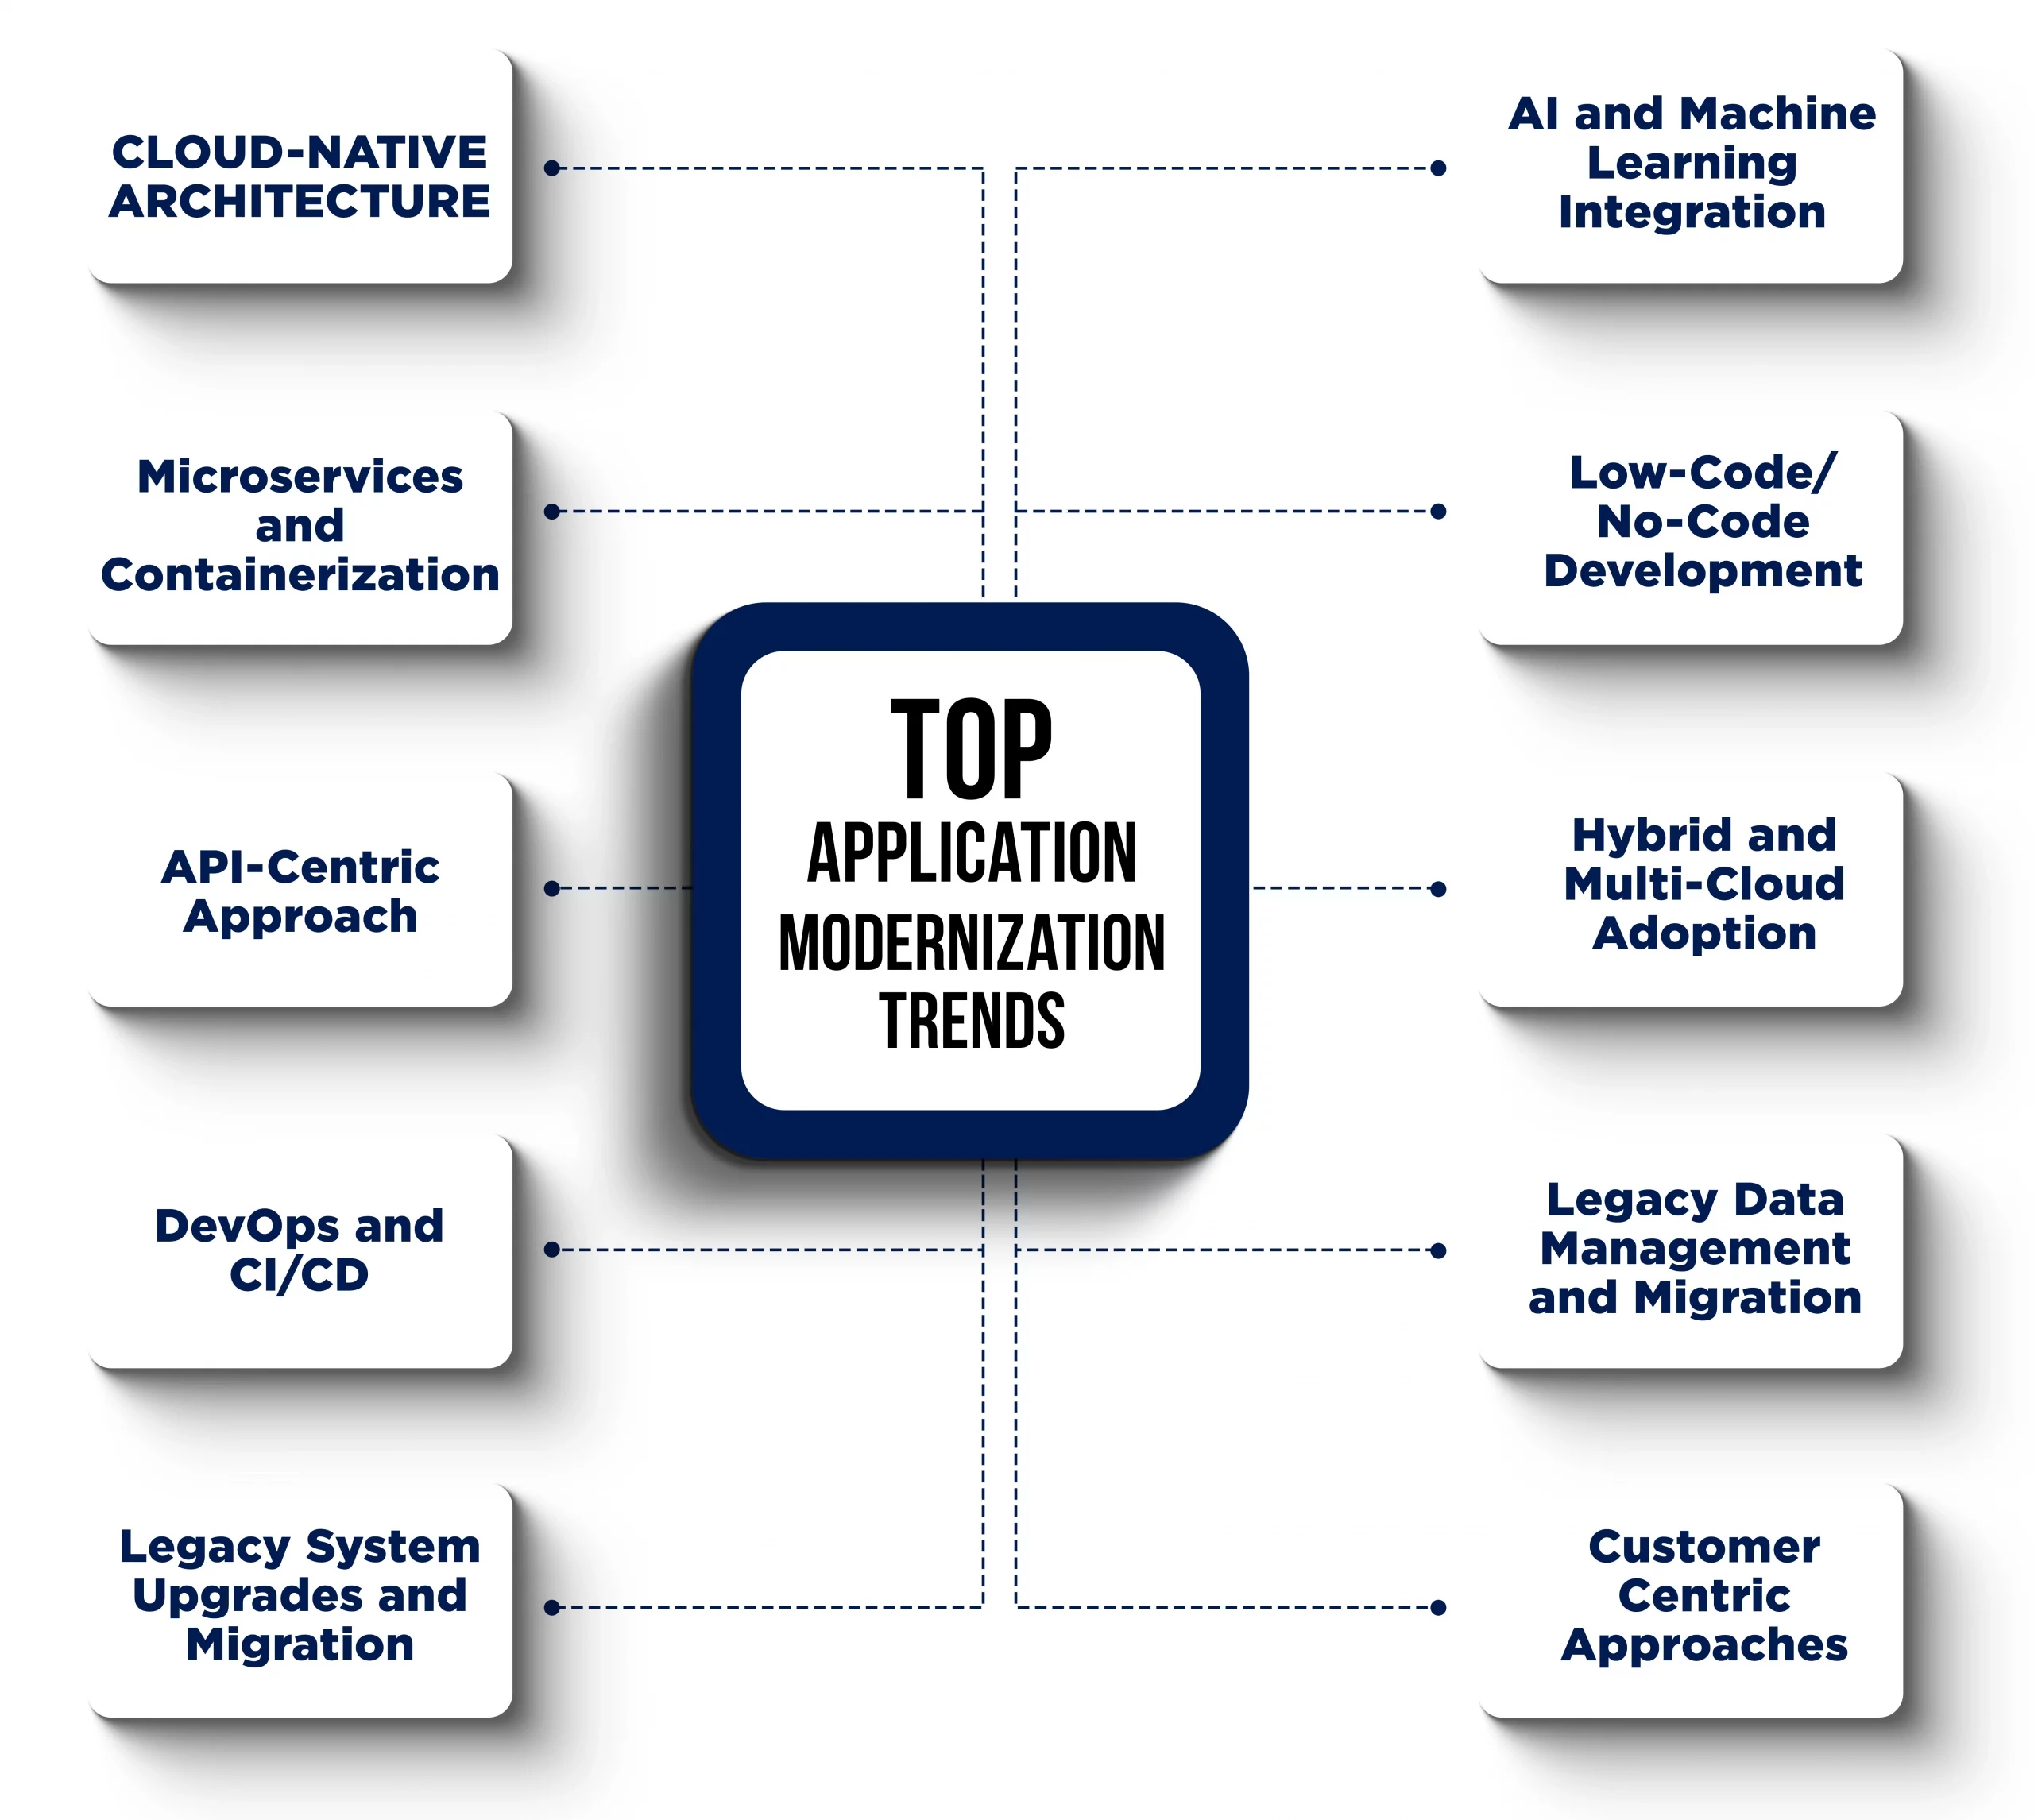 Top Application Modernization Trends